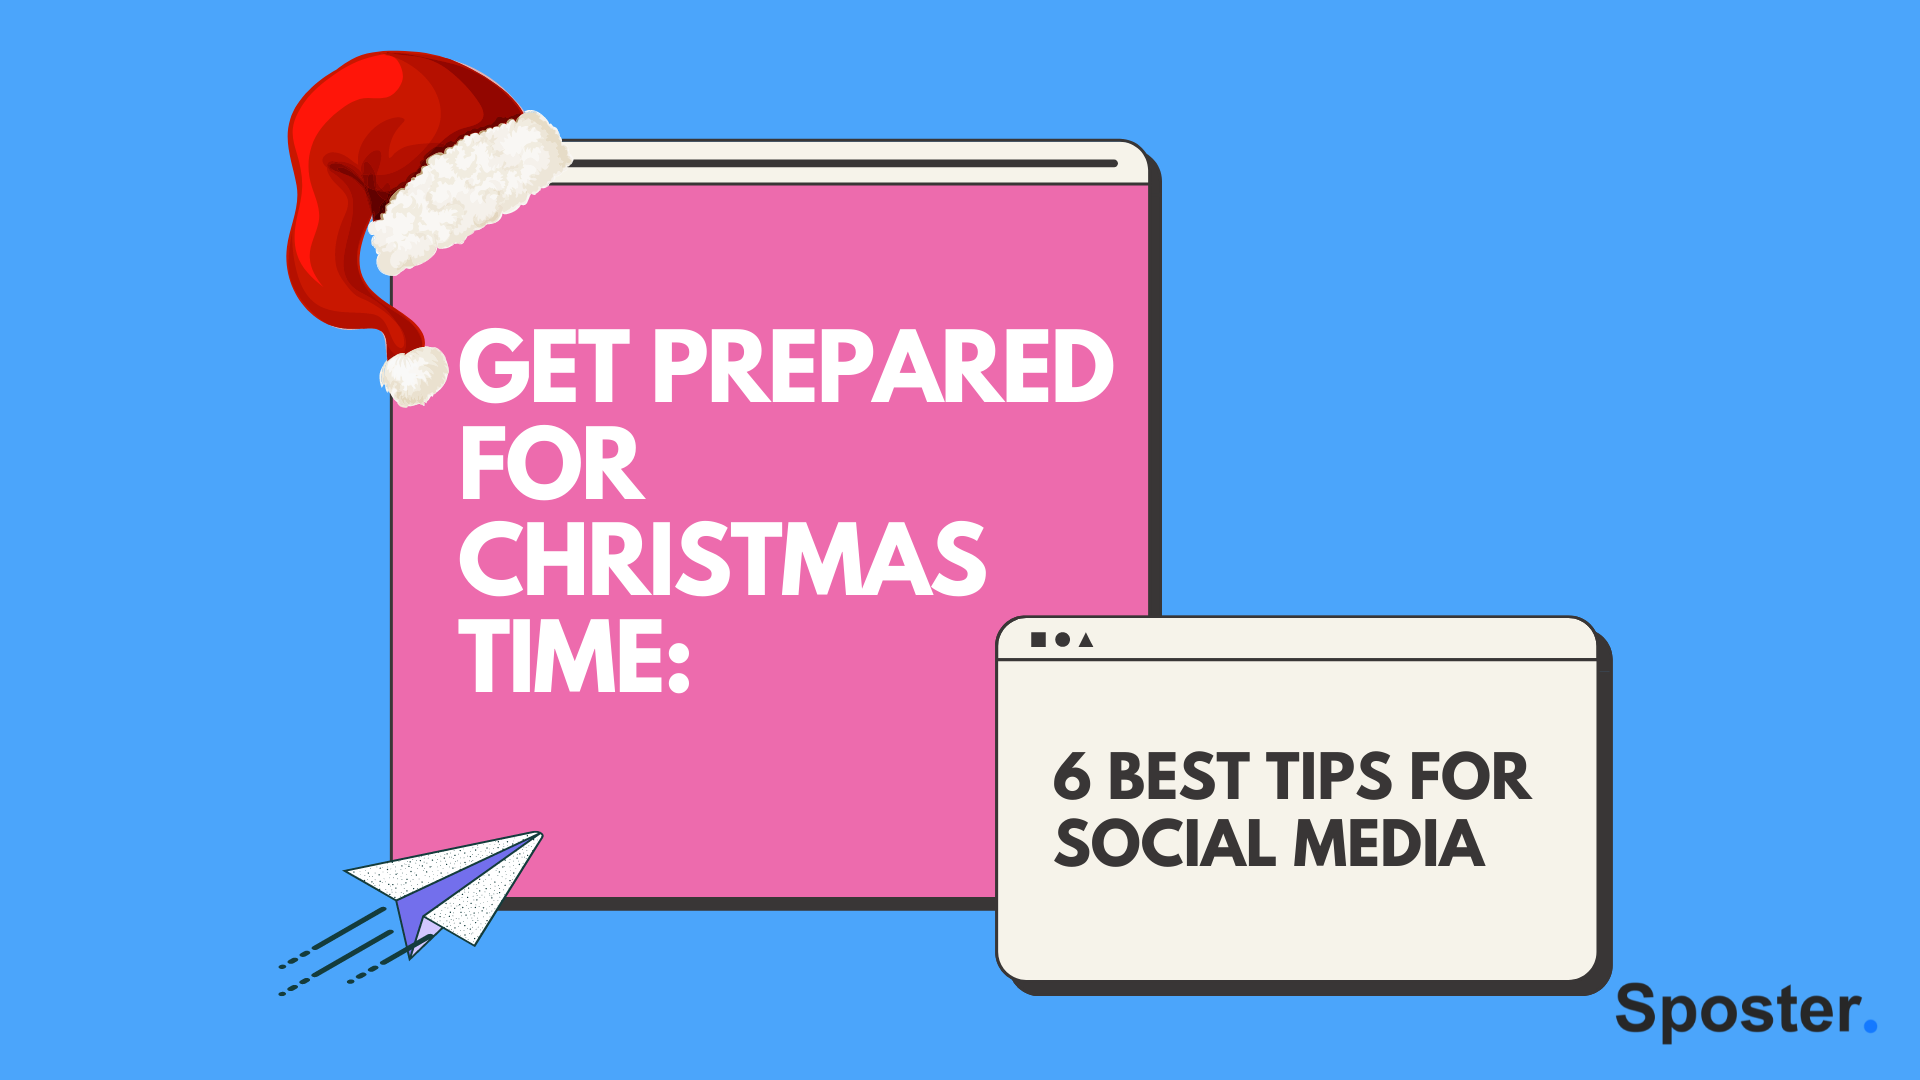 Get Prepared for Christmas Time: 6 Best Tips for Social Media